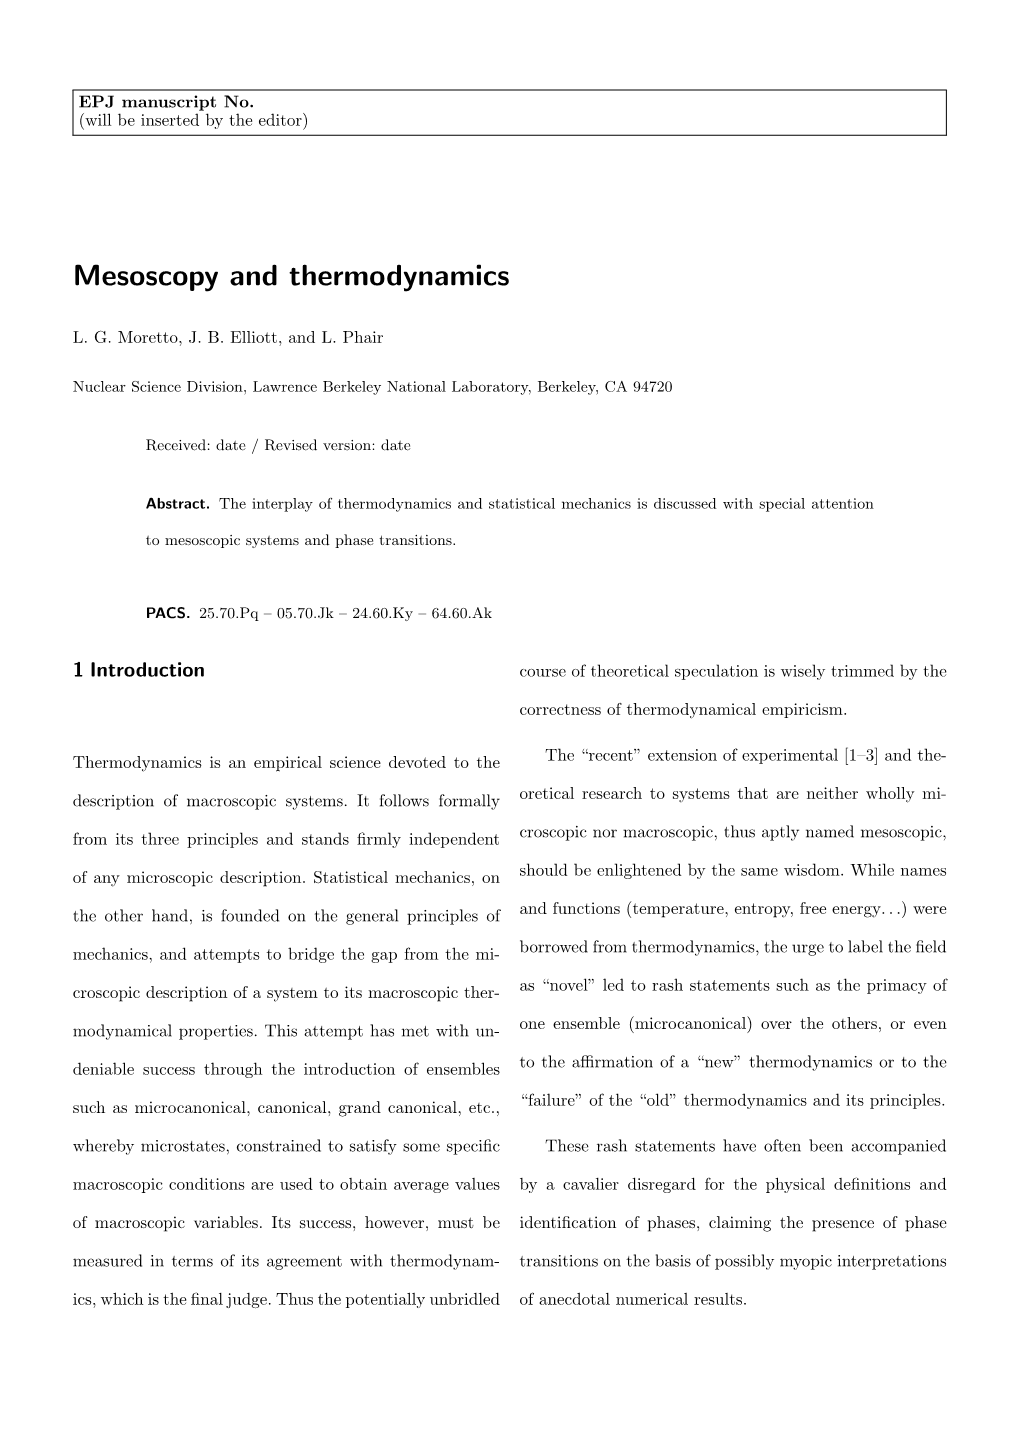 Mesoscopy and Thermodynamics